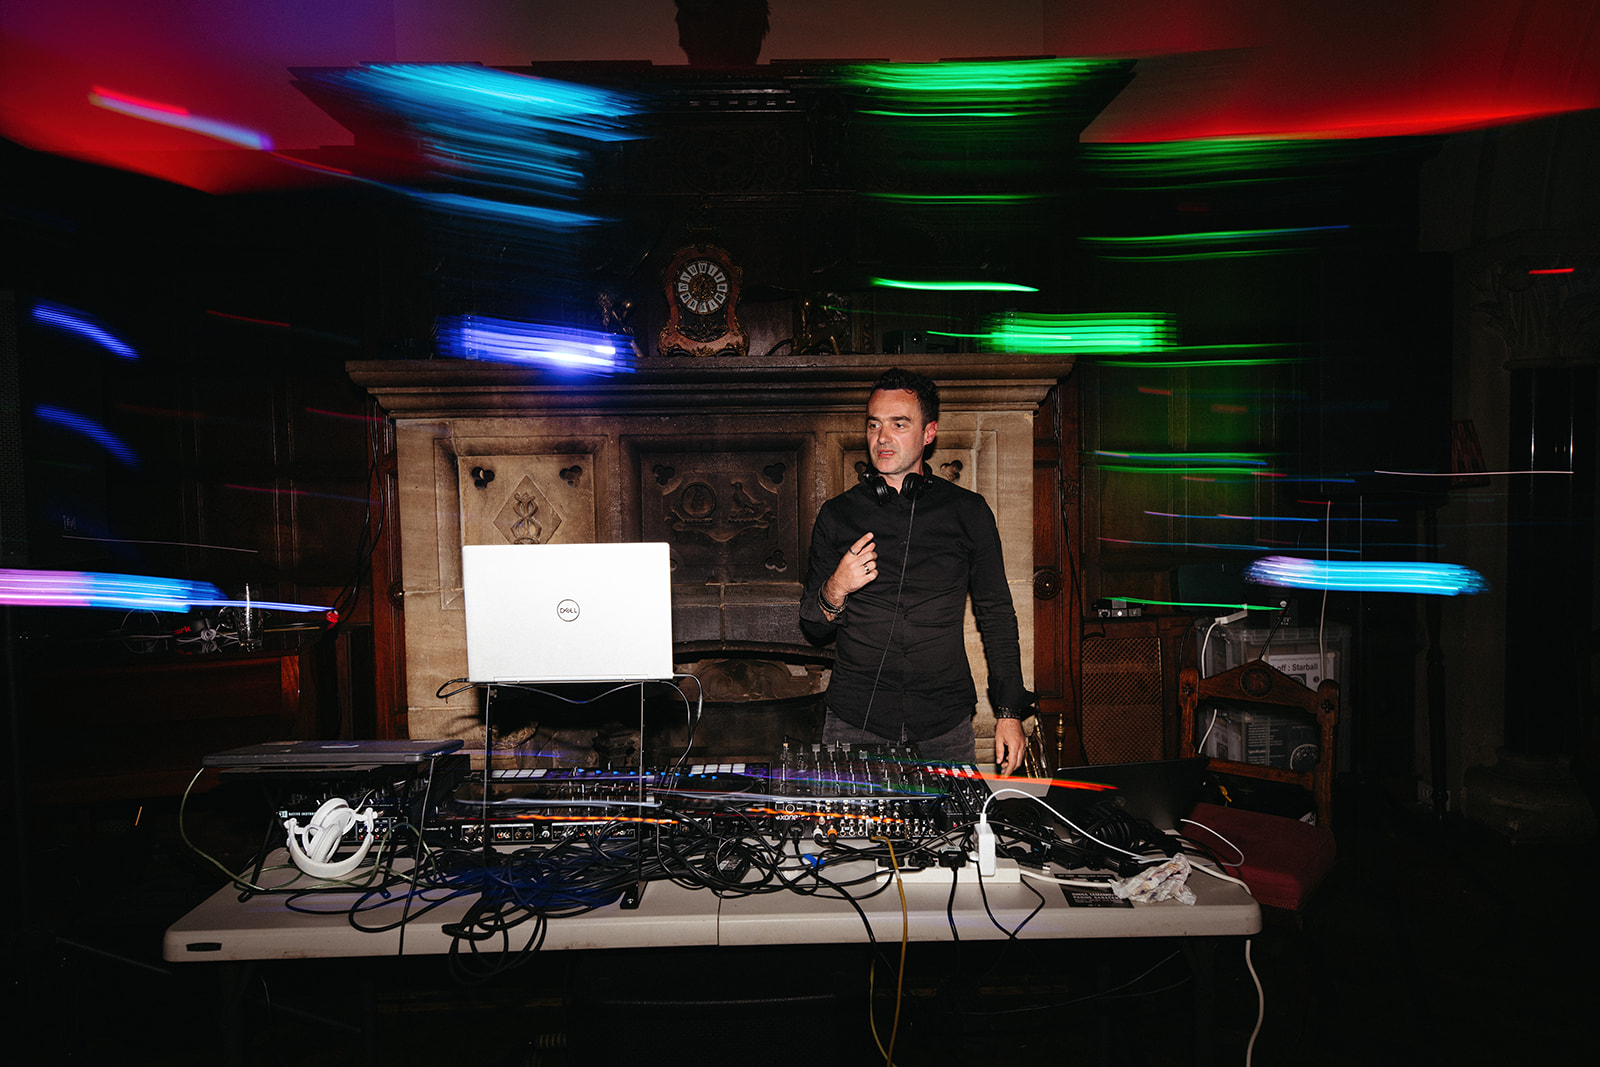 Sinisa Tomanovic DJ play music for wedding party at at Huntsham Court castle, England